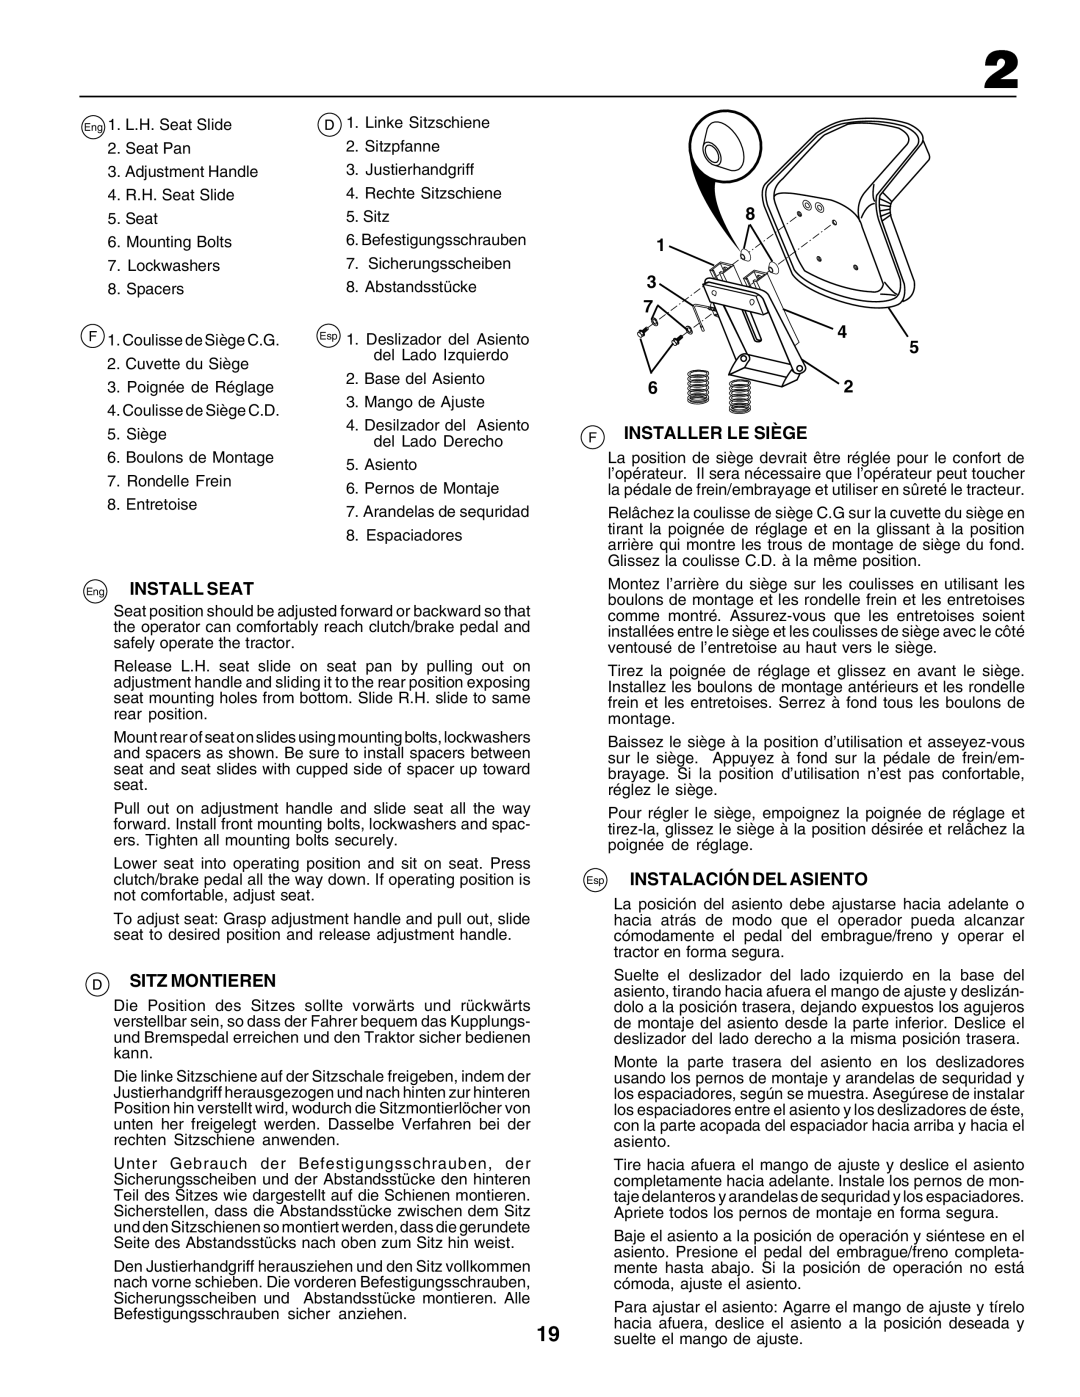 Husqvarna GTH250 instruction manual Eng INSTALL SEAT, F Installer Le Siège, Esp INSTALACIÓN DEL ASIENTO, Sitz Montieren 